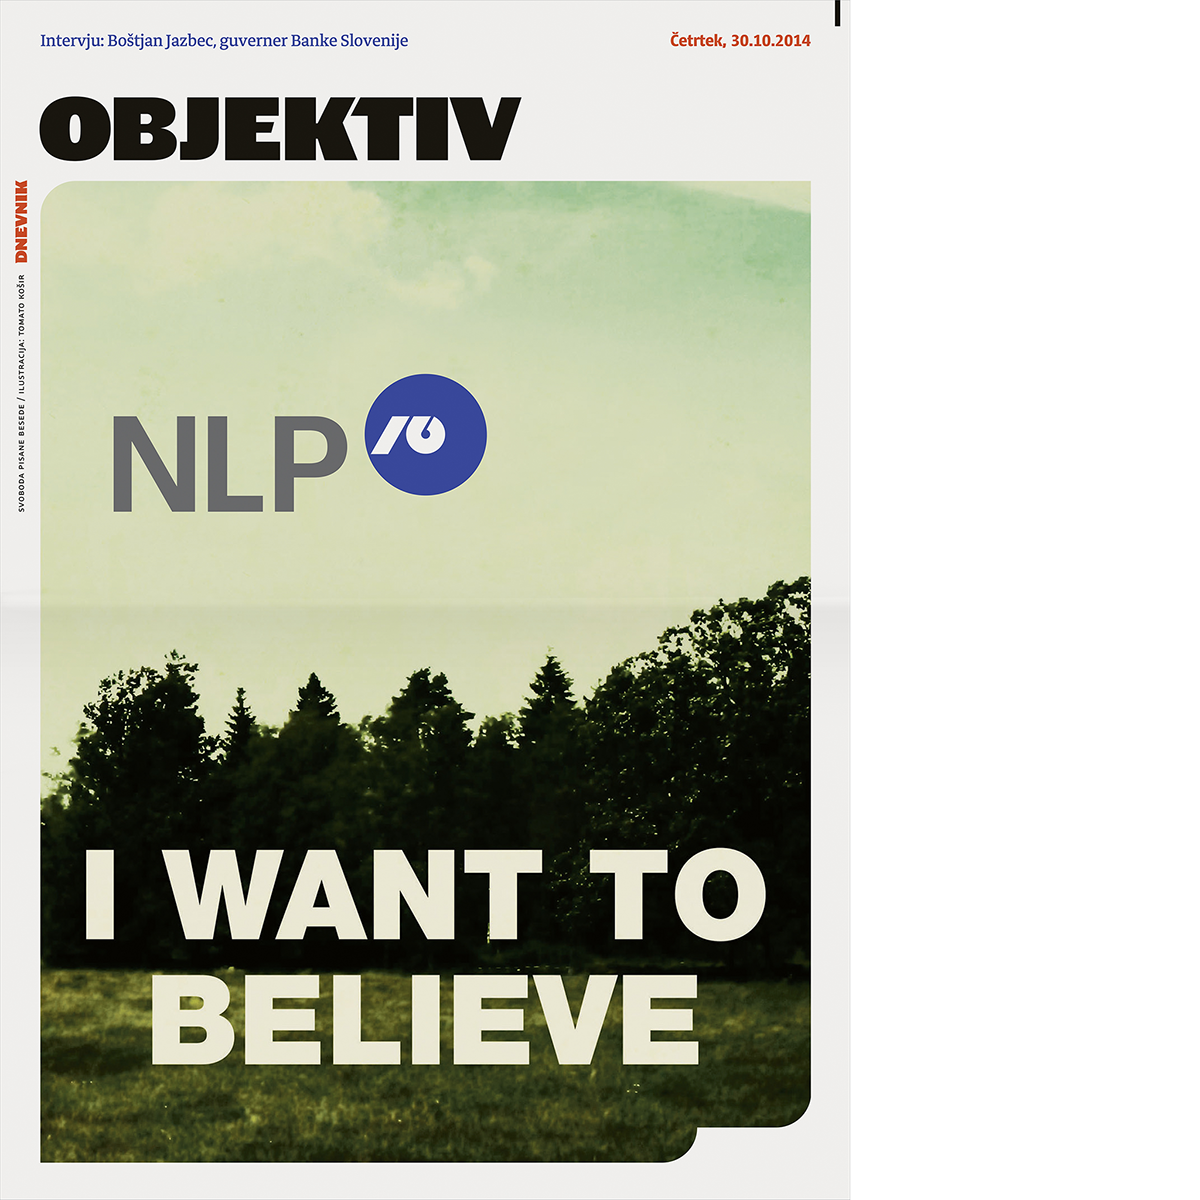 newspaper cover political provocative award ADC slovenia TomatoKosir magazine frontpage ad ads photoillustration